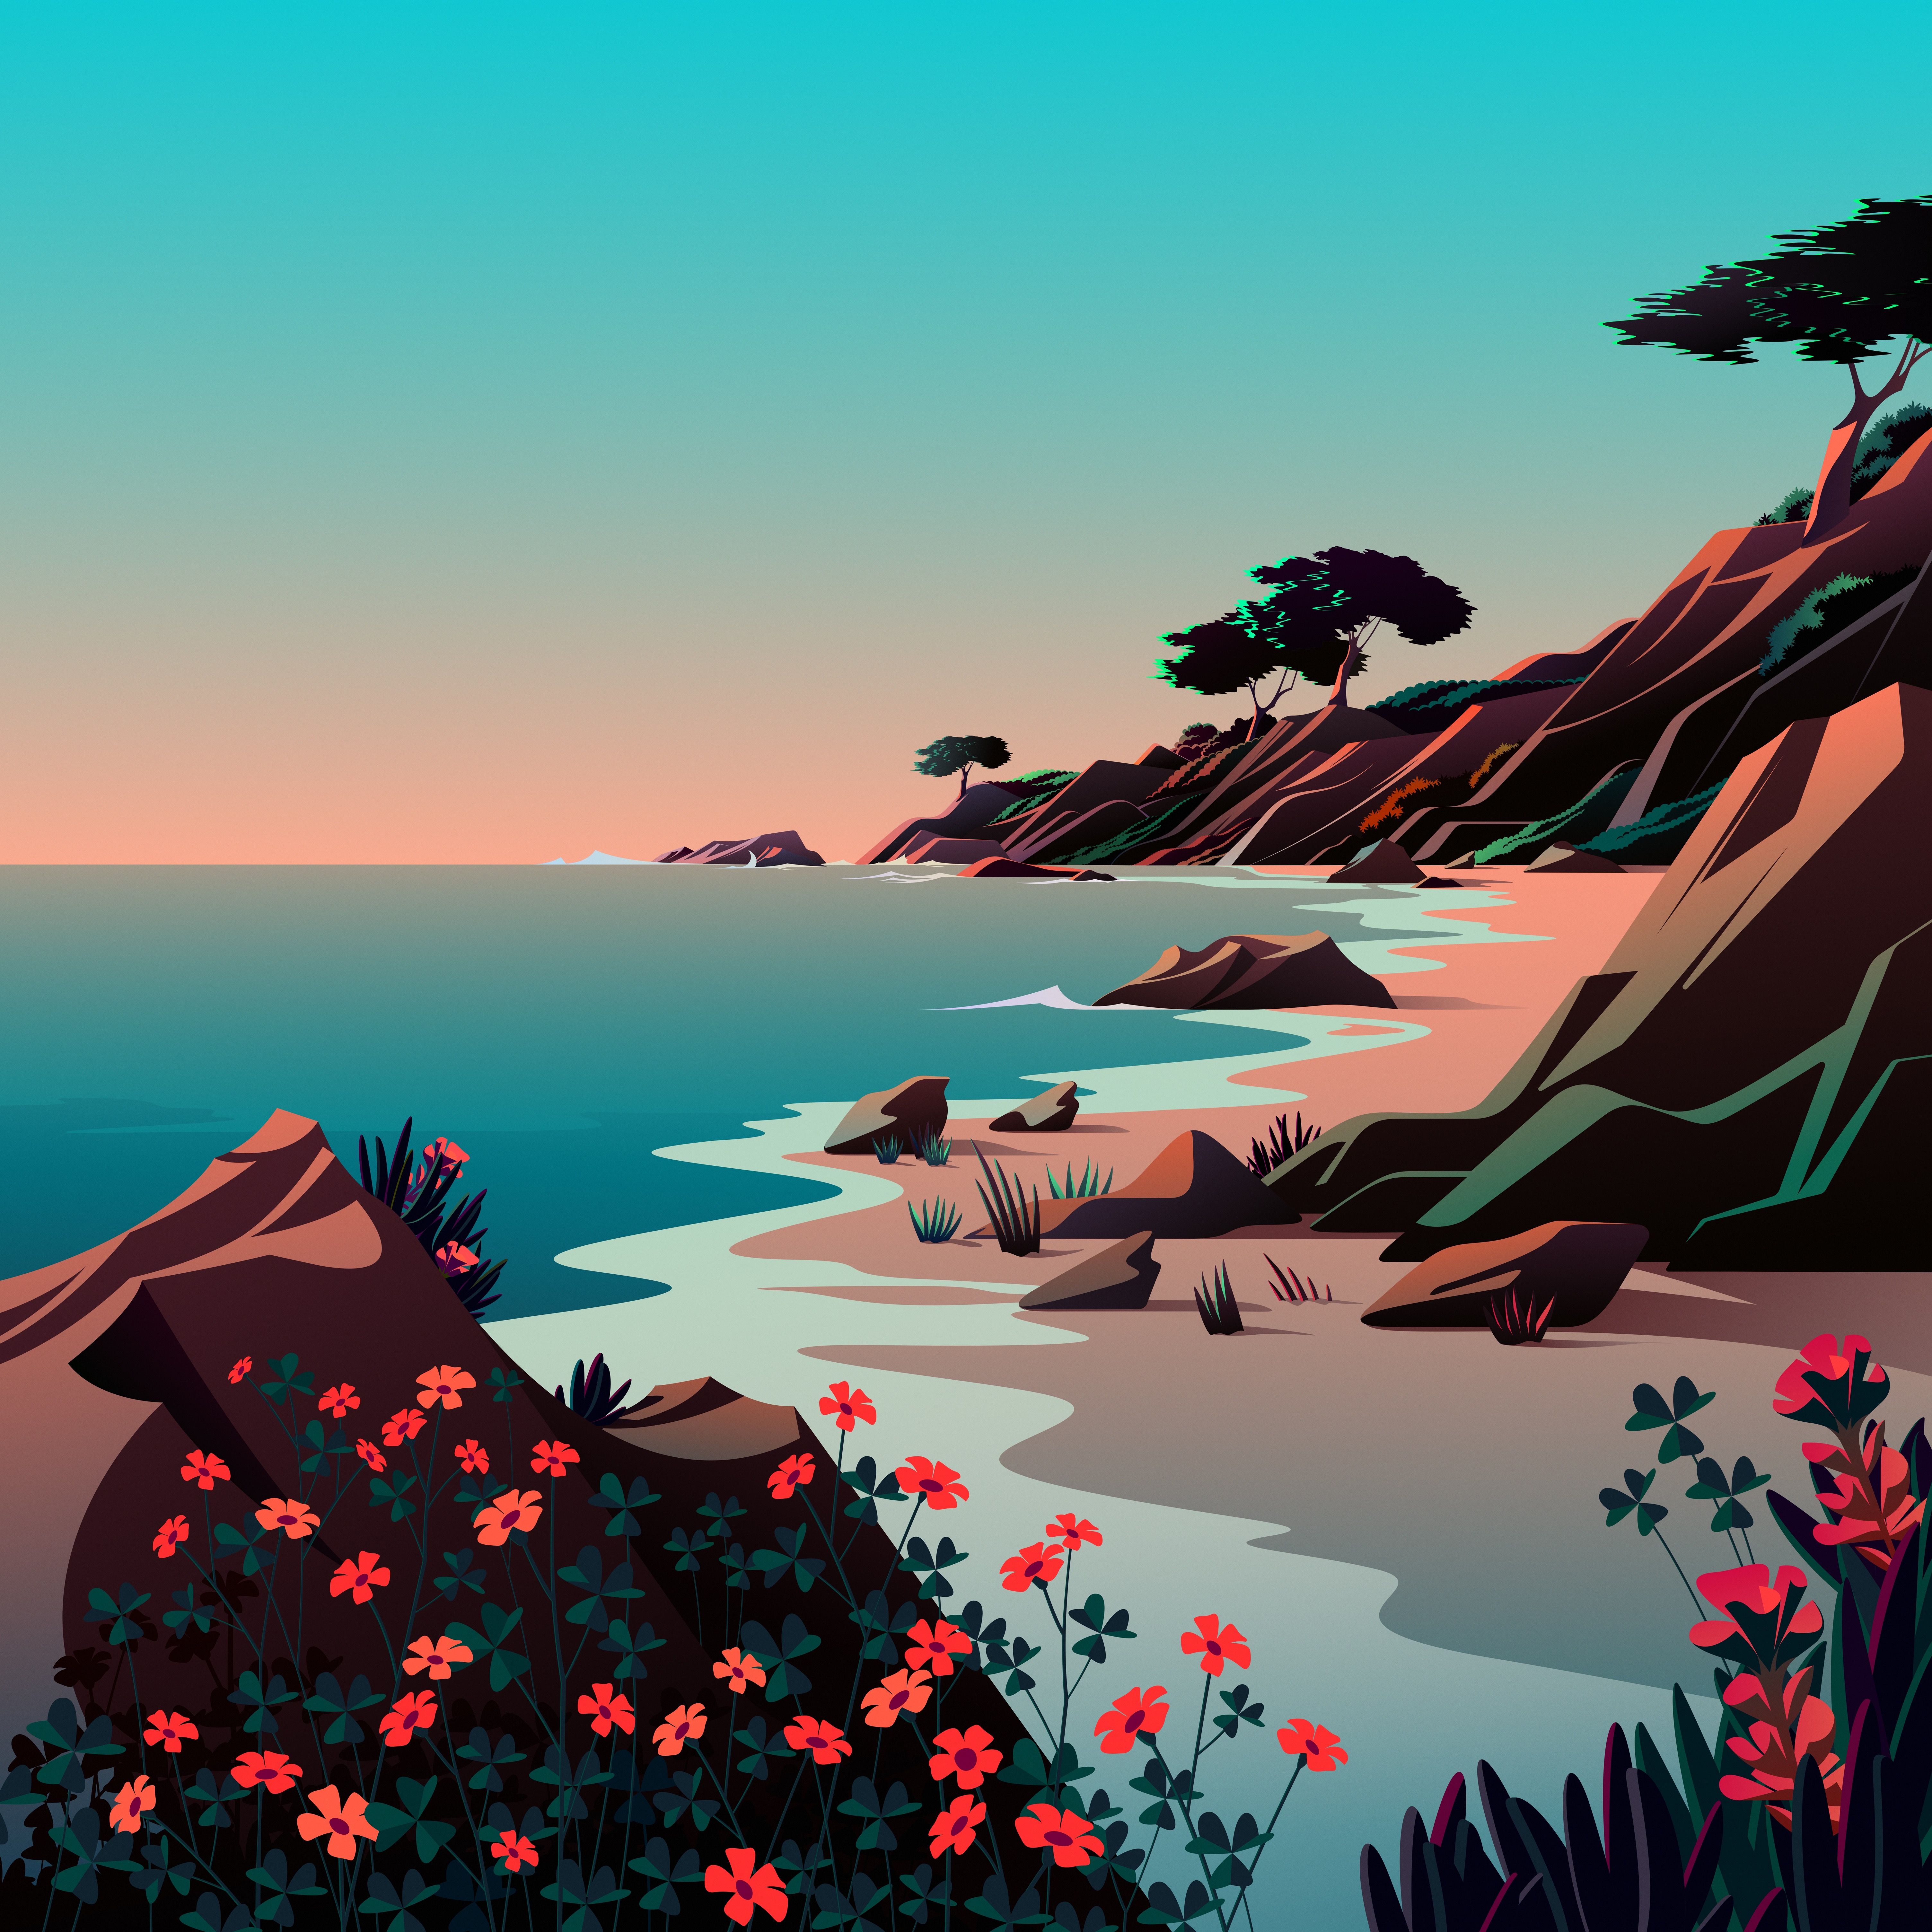 Beach 4K Wallpaper, Landscape, Morning, Scenery, Illustration, macOS Big Sur, iOS Stock, Nature